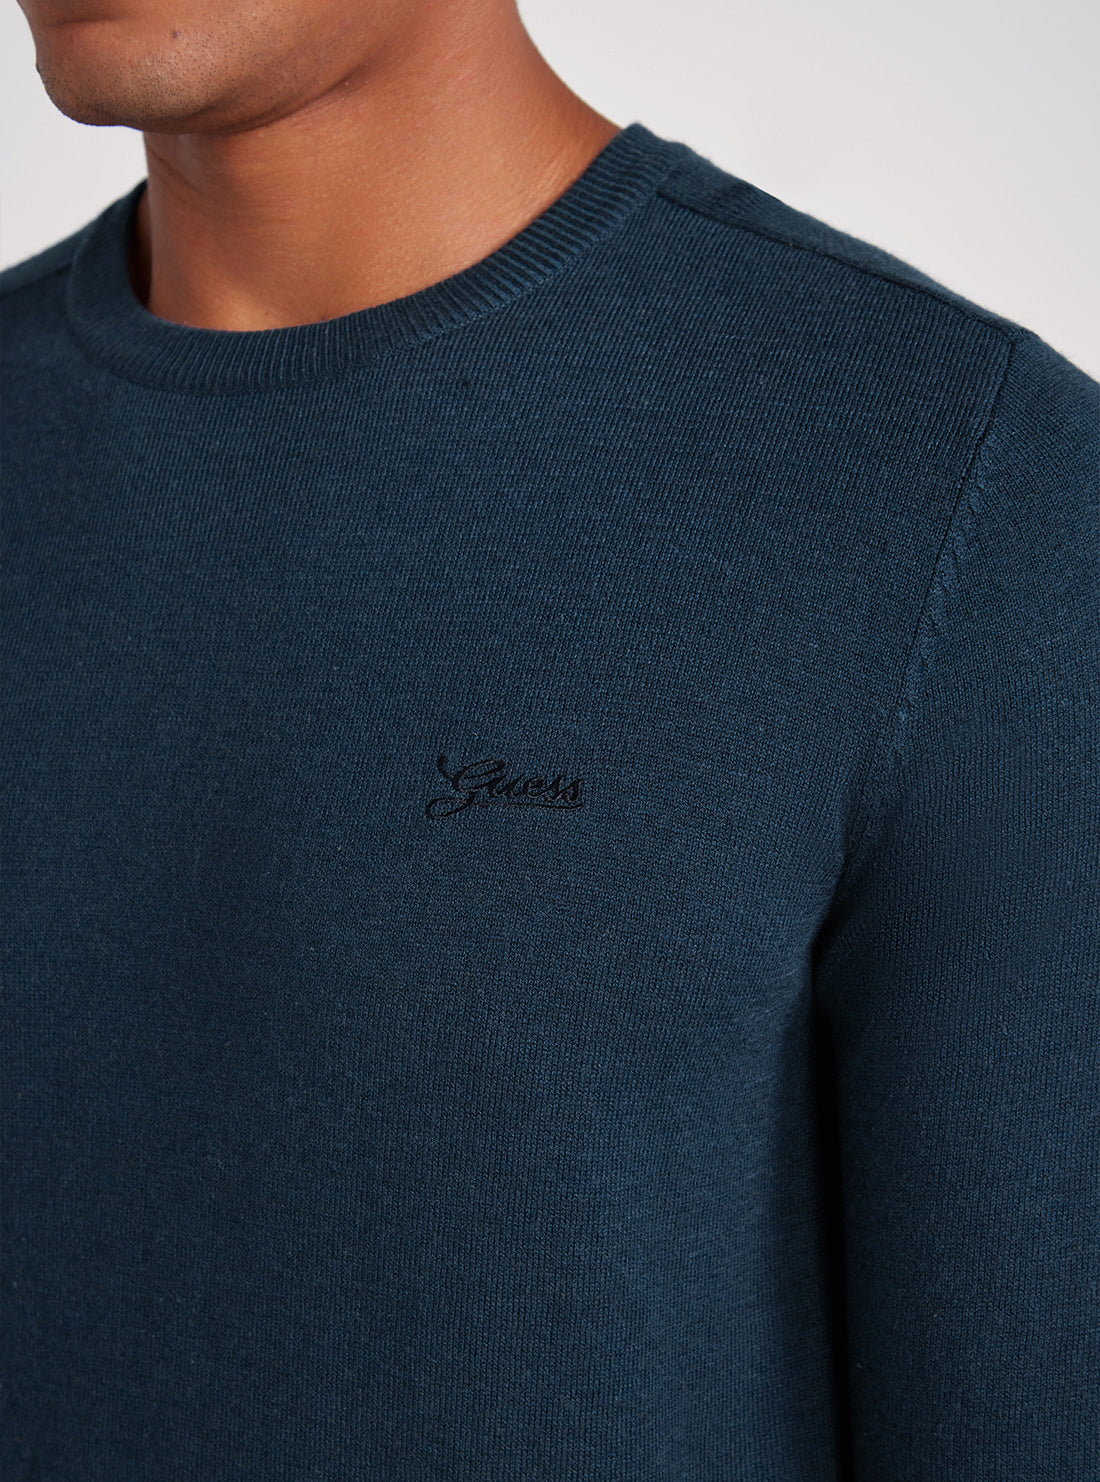 Coastal Blue Valentine Knit Jumper | GUESS Men's Apparel | detail view